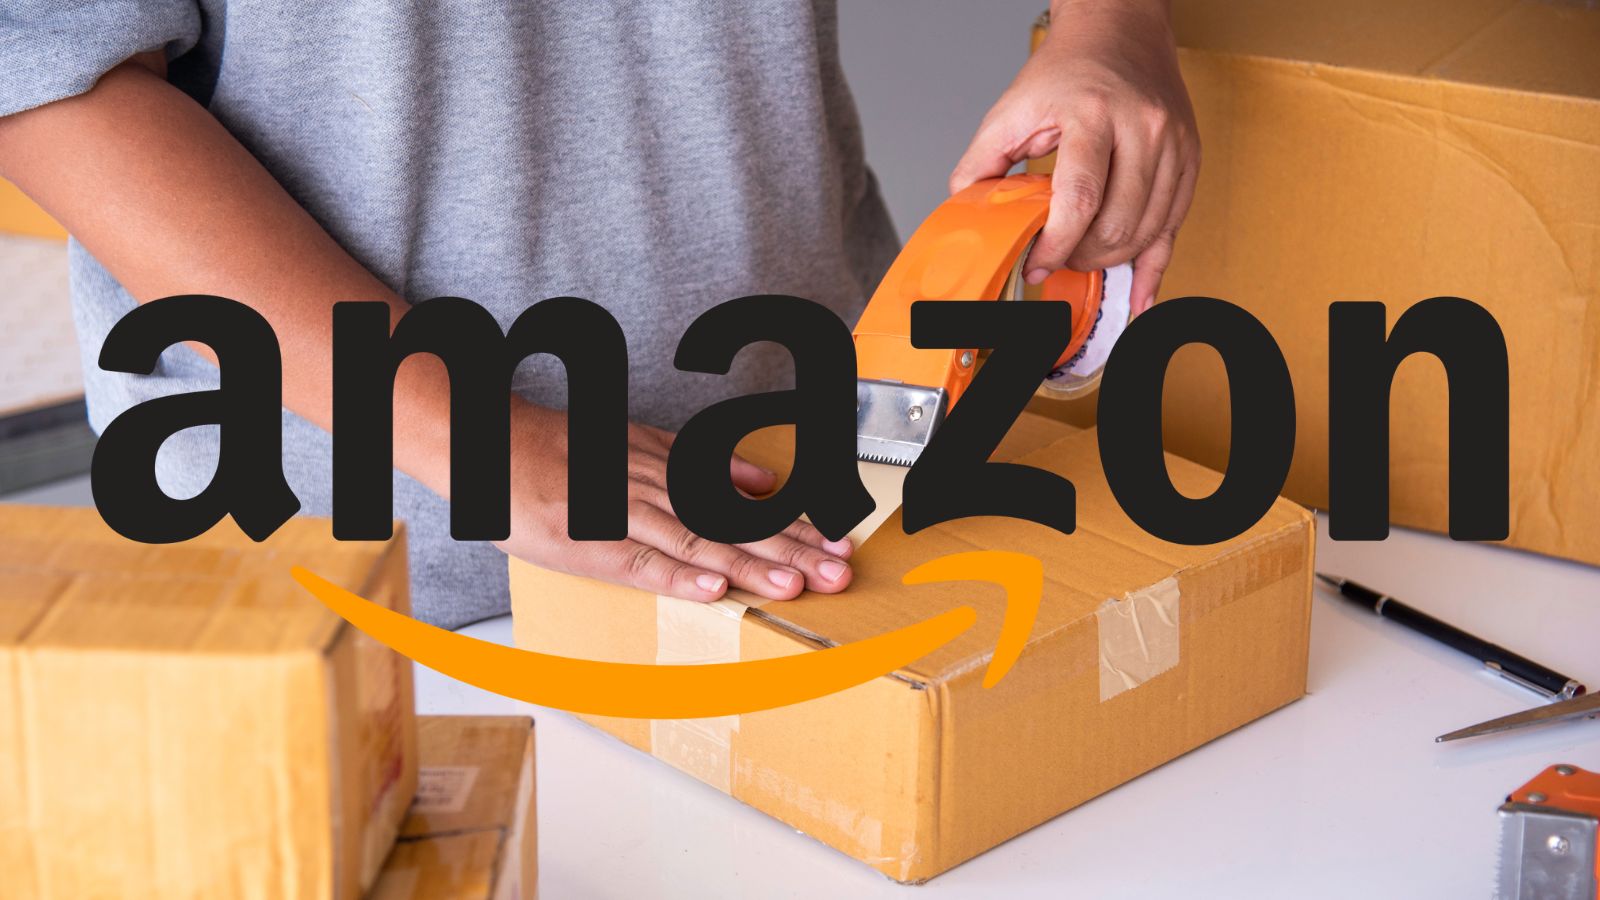 Amazon, FOLLIA di Natale: tecnologia GRATIS oggi